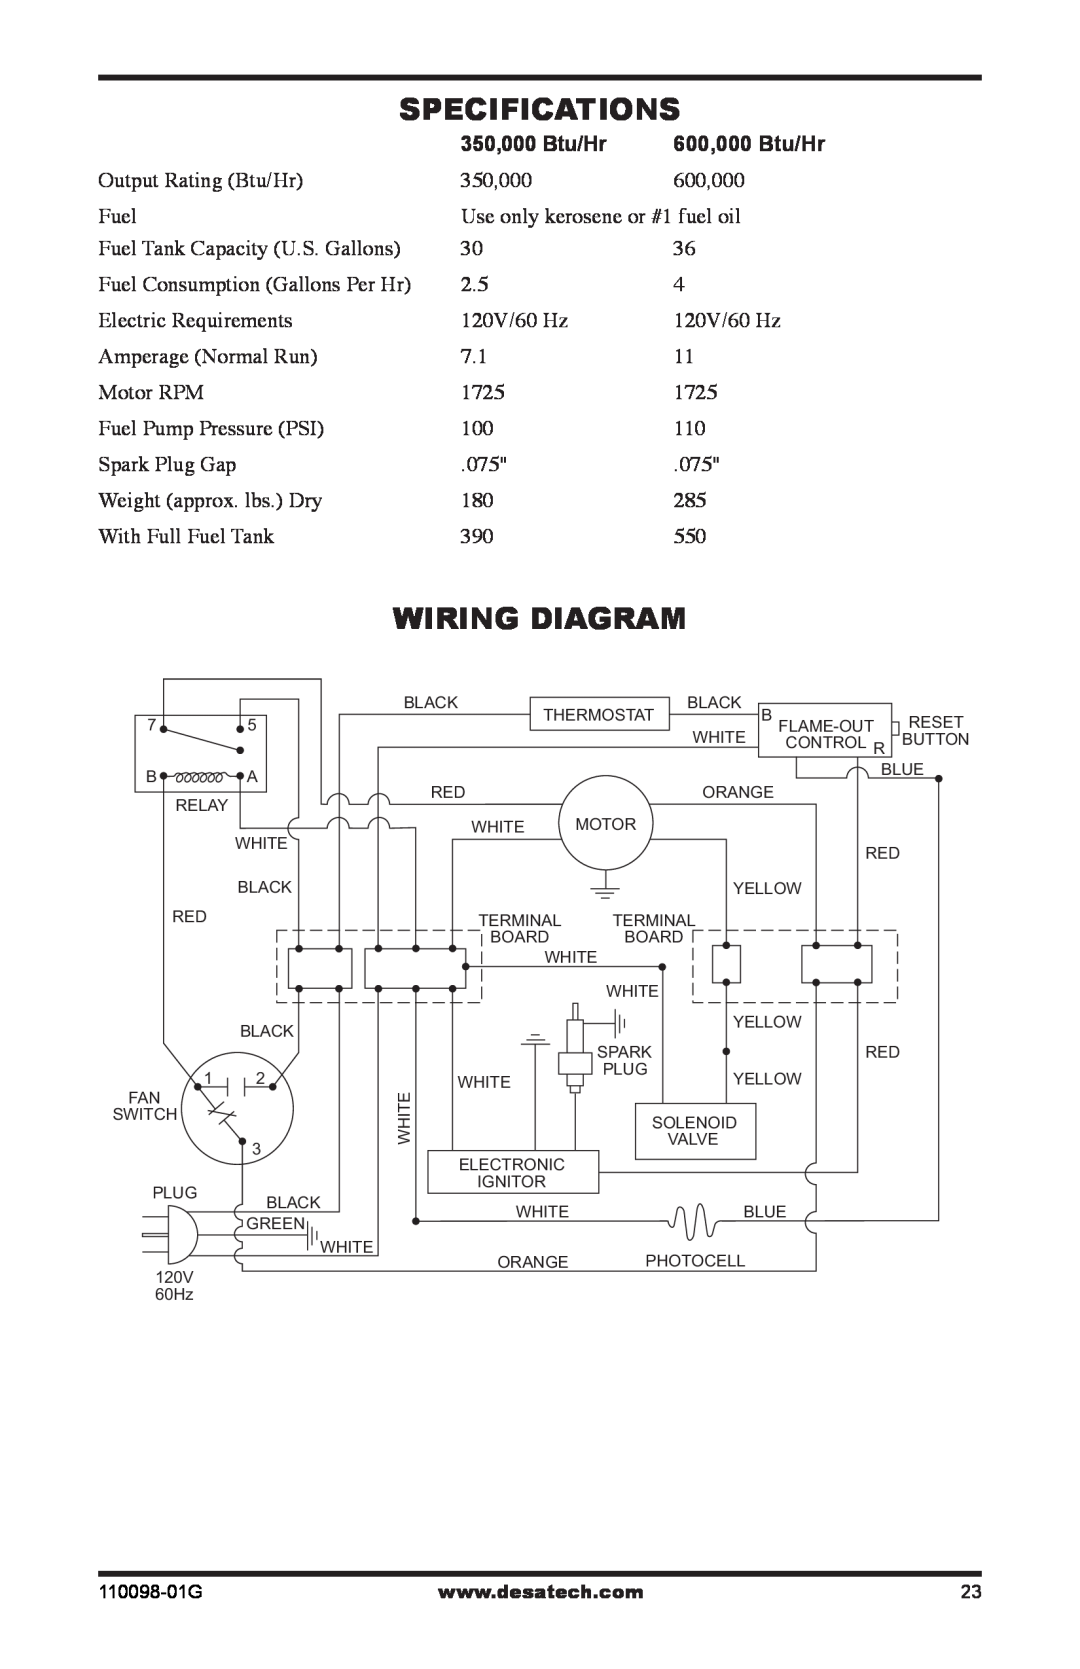 Desa Tech HEATERS OWNER'S MANUAL owner manual Specifications, Wiring Diagram, 350,000 Btu/Hr 